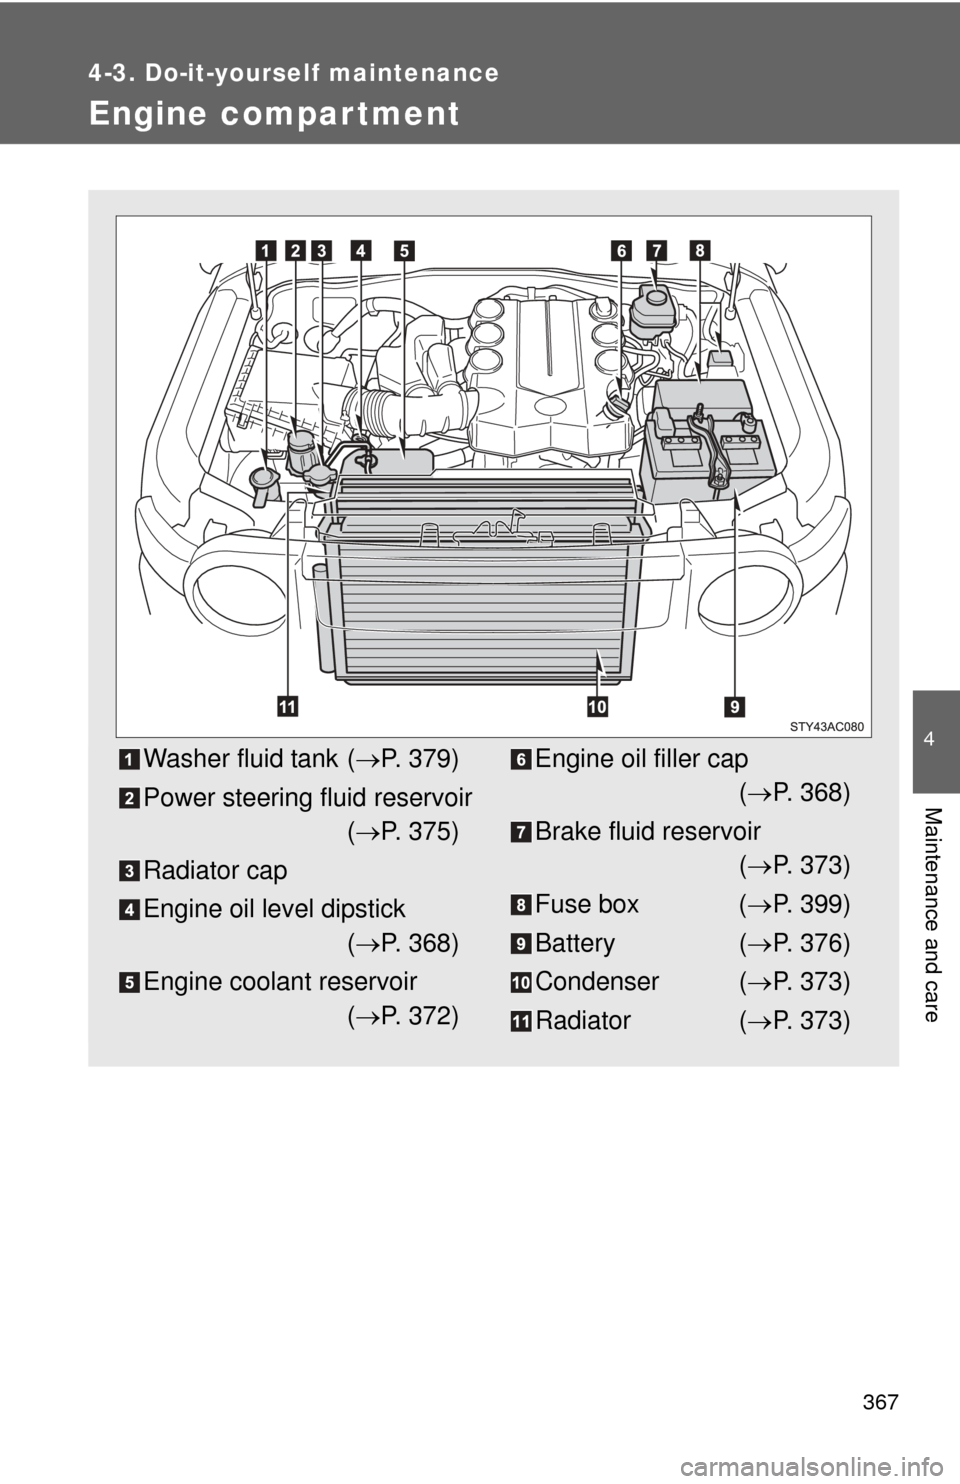 TOYOTA FJ CRUISER 2011 1.G Owners Manual 367
4-3. Do-it-yourself maintenance
4
Maintenance and care
Engine compar tment
Washer fluid tank (P. 379)
Power steering fluid reservoir ( P. 375)
Radiator cap
Engine oil level dipstick ( P. 